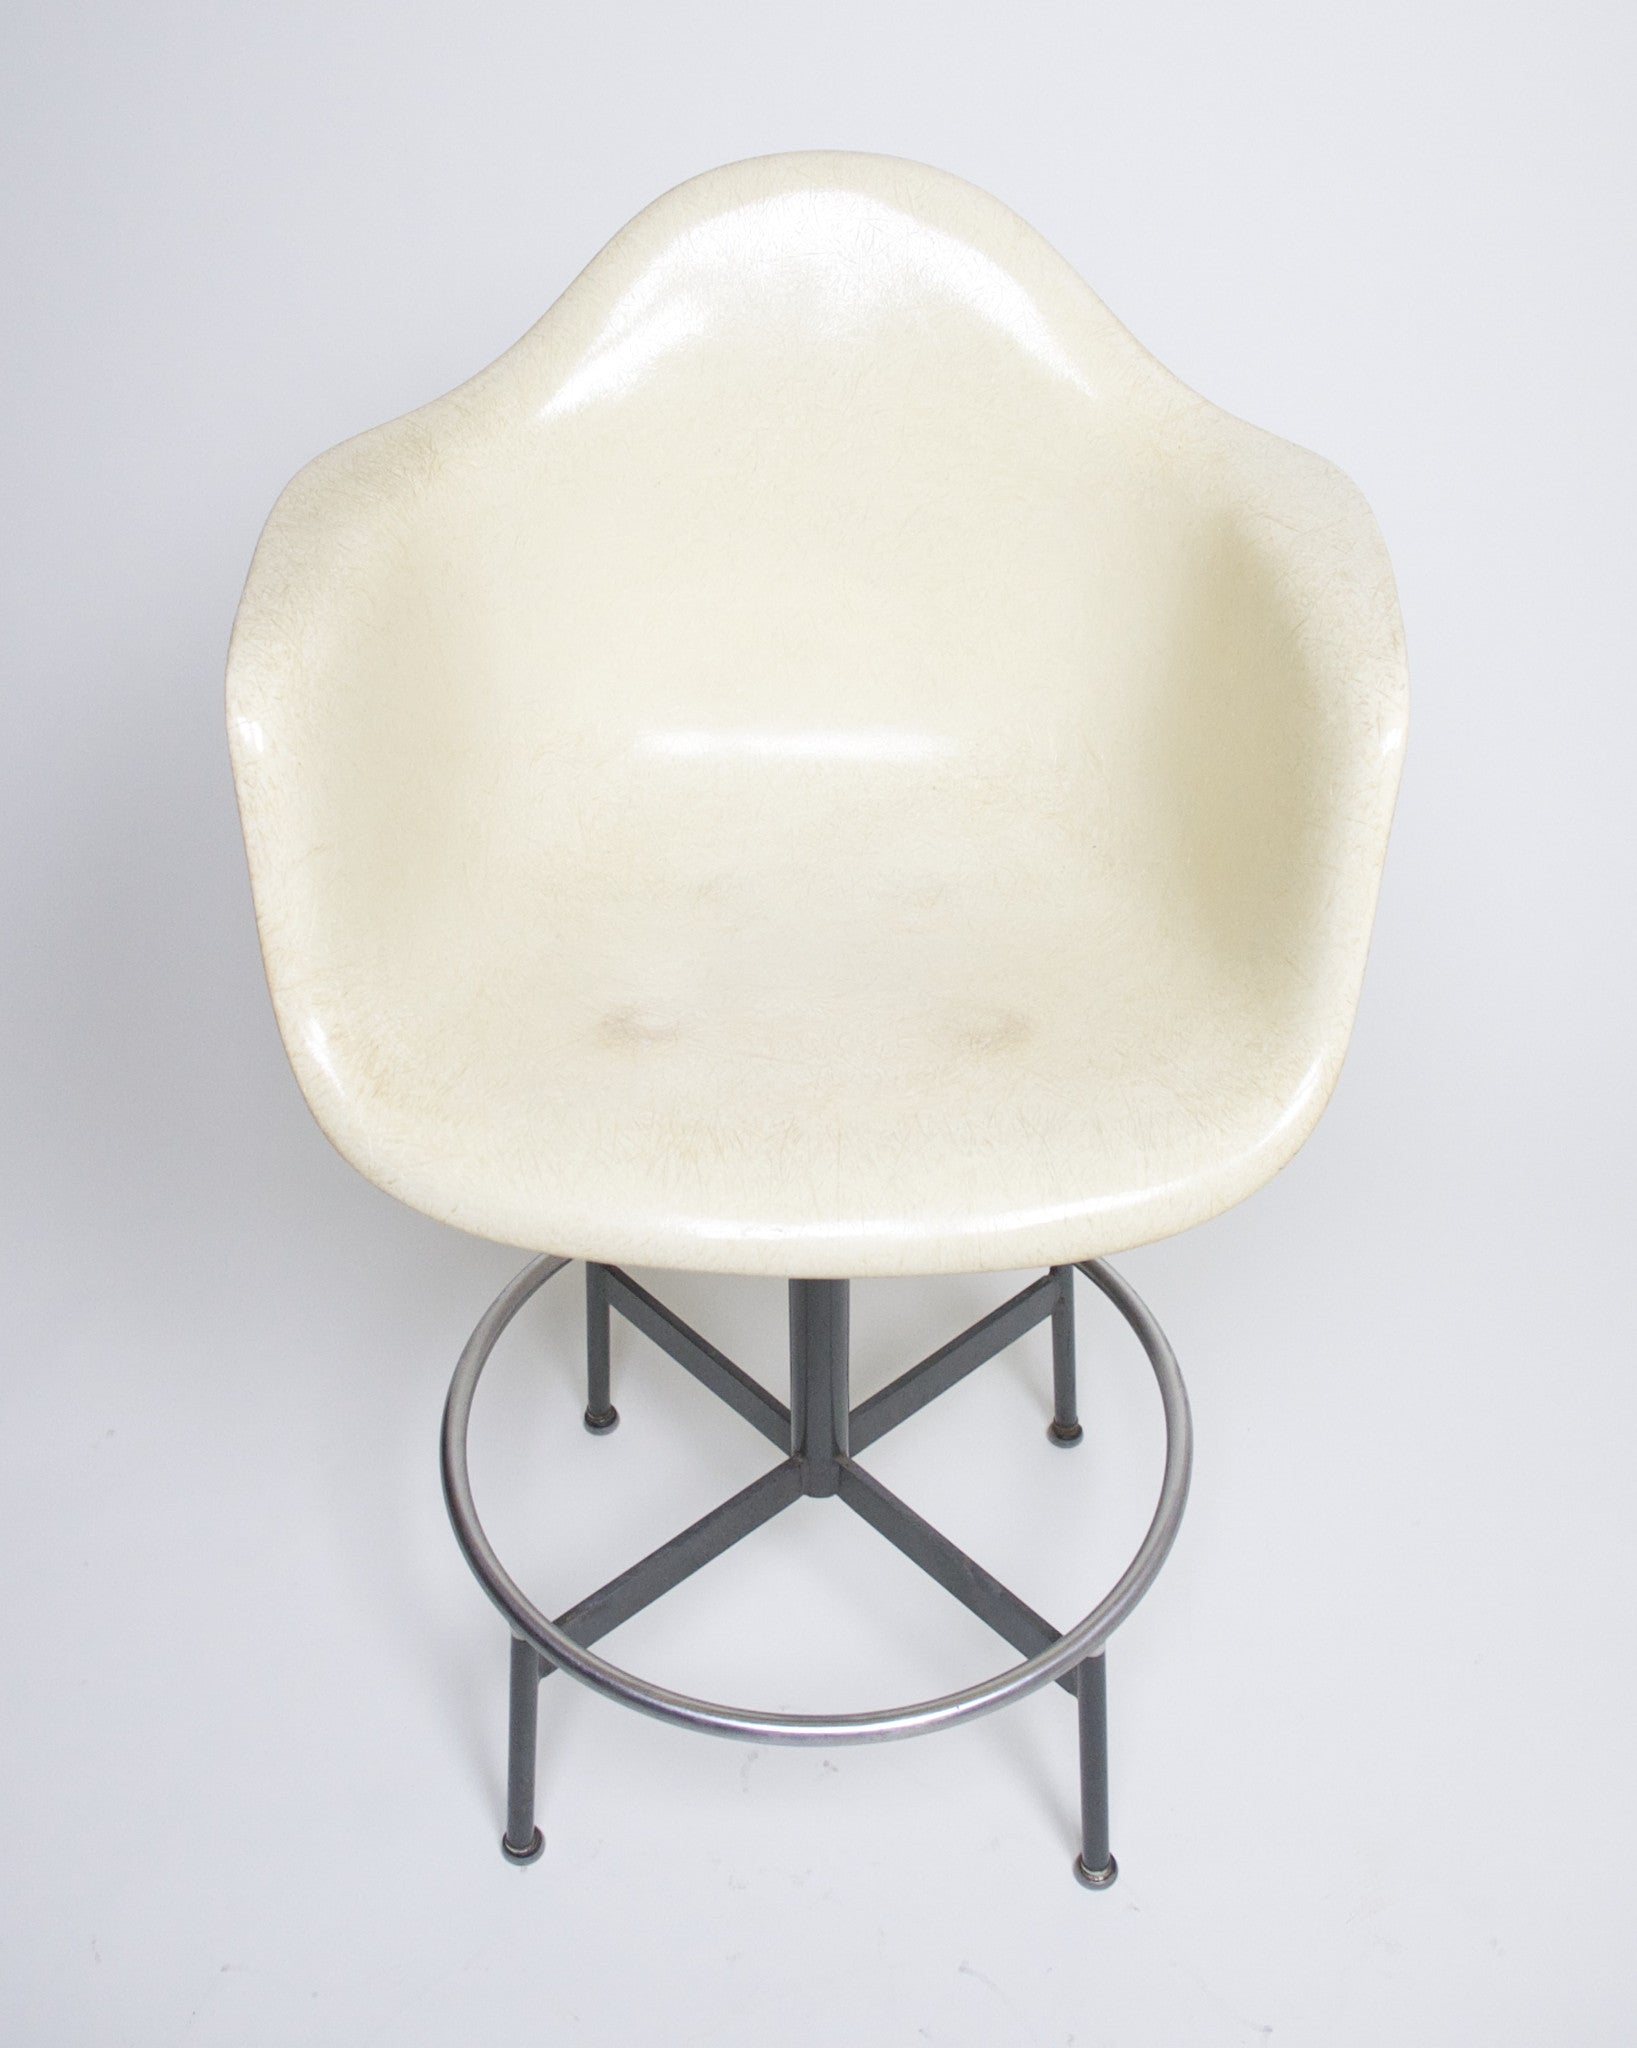 SOLD Rare Herman Miller Eames Fiberglass Drafting Arm Shell Chair 1950's vintage